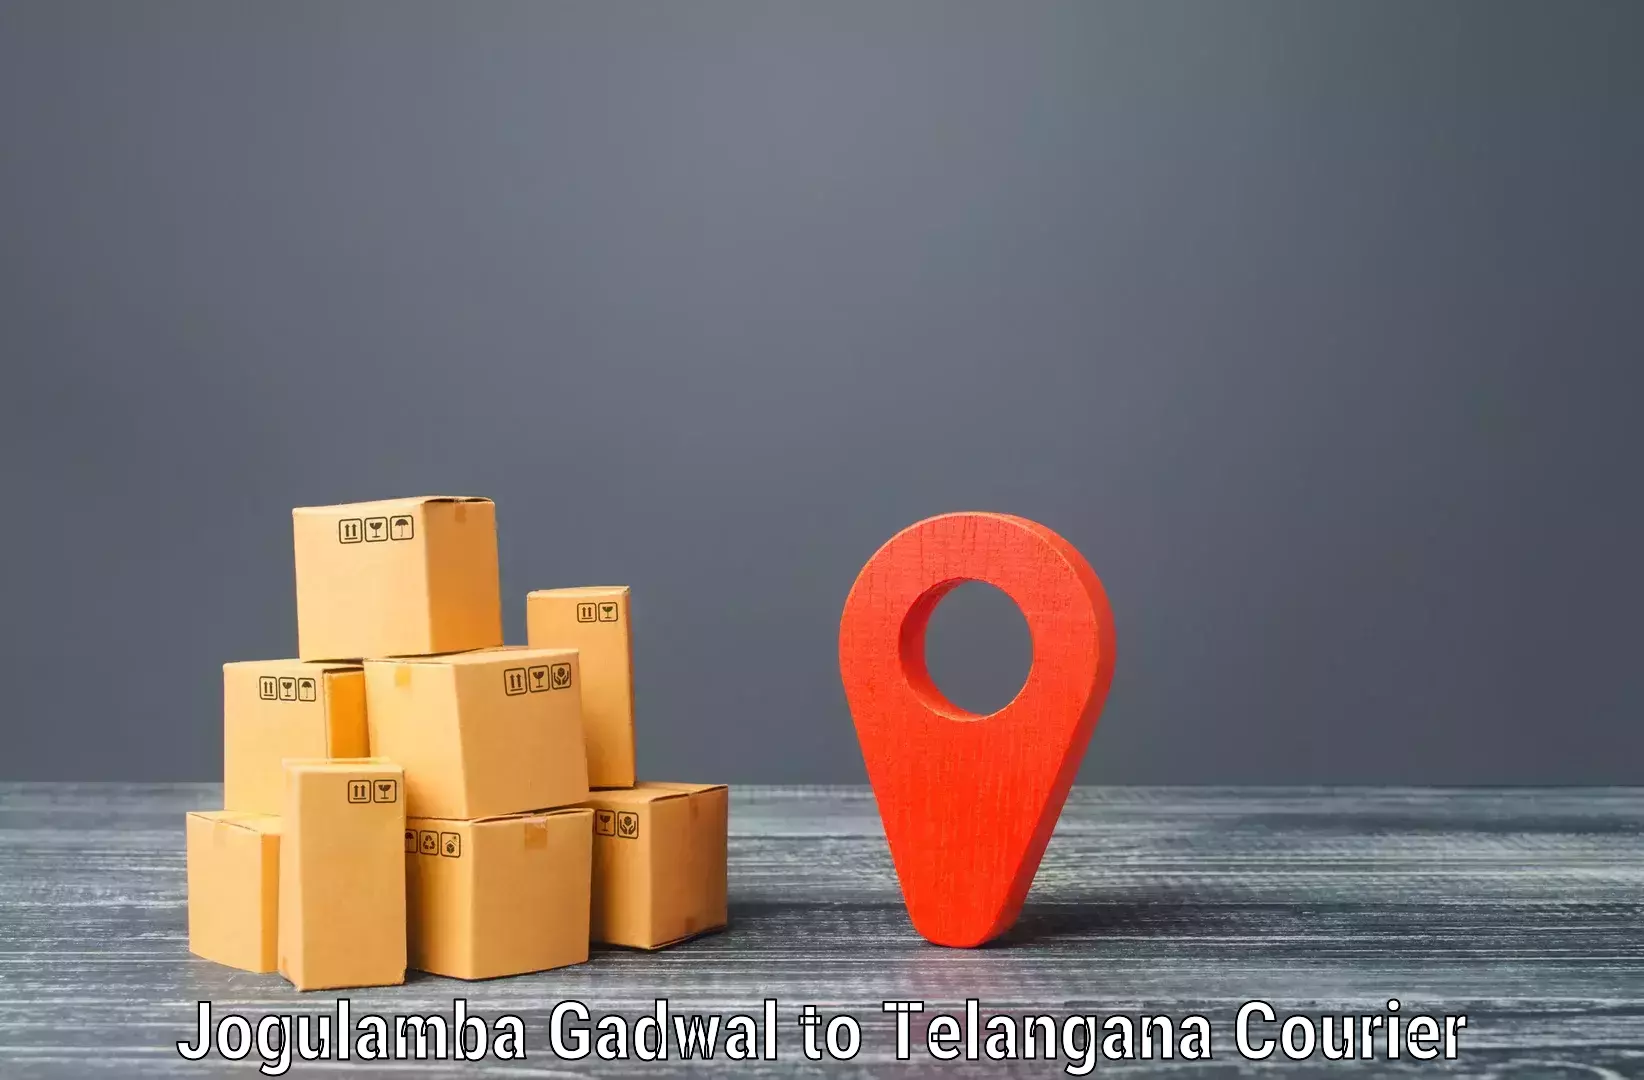 Courier service efficiency in Jogulamba Gadwal to Boath Buzurg